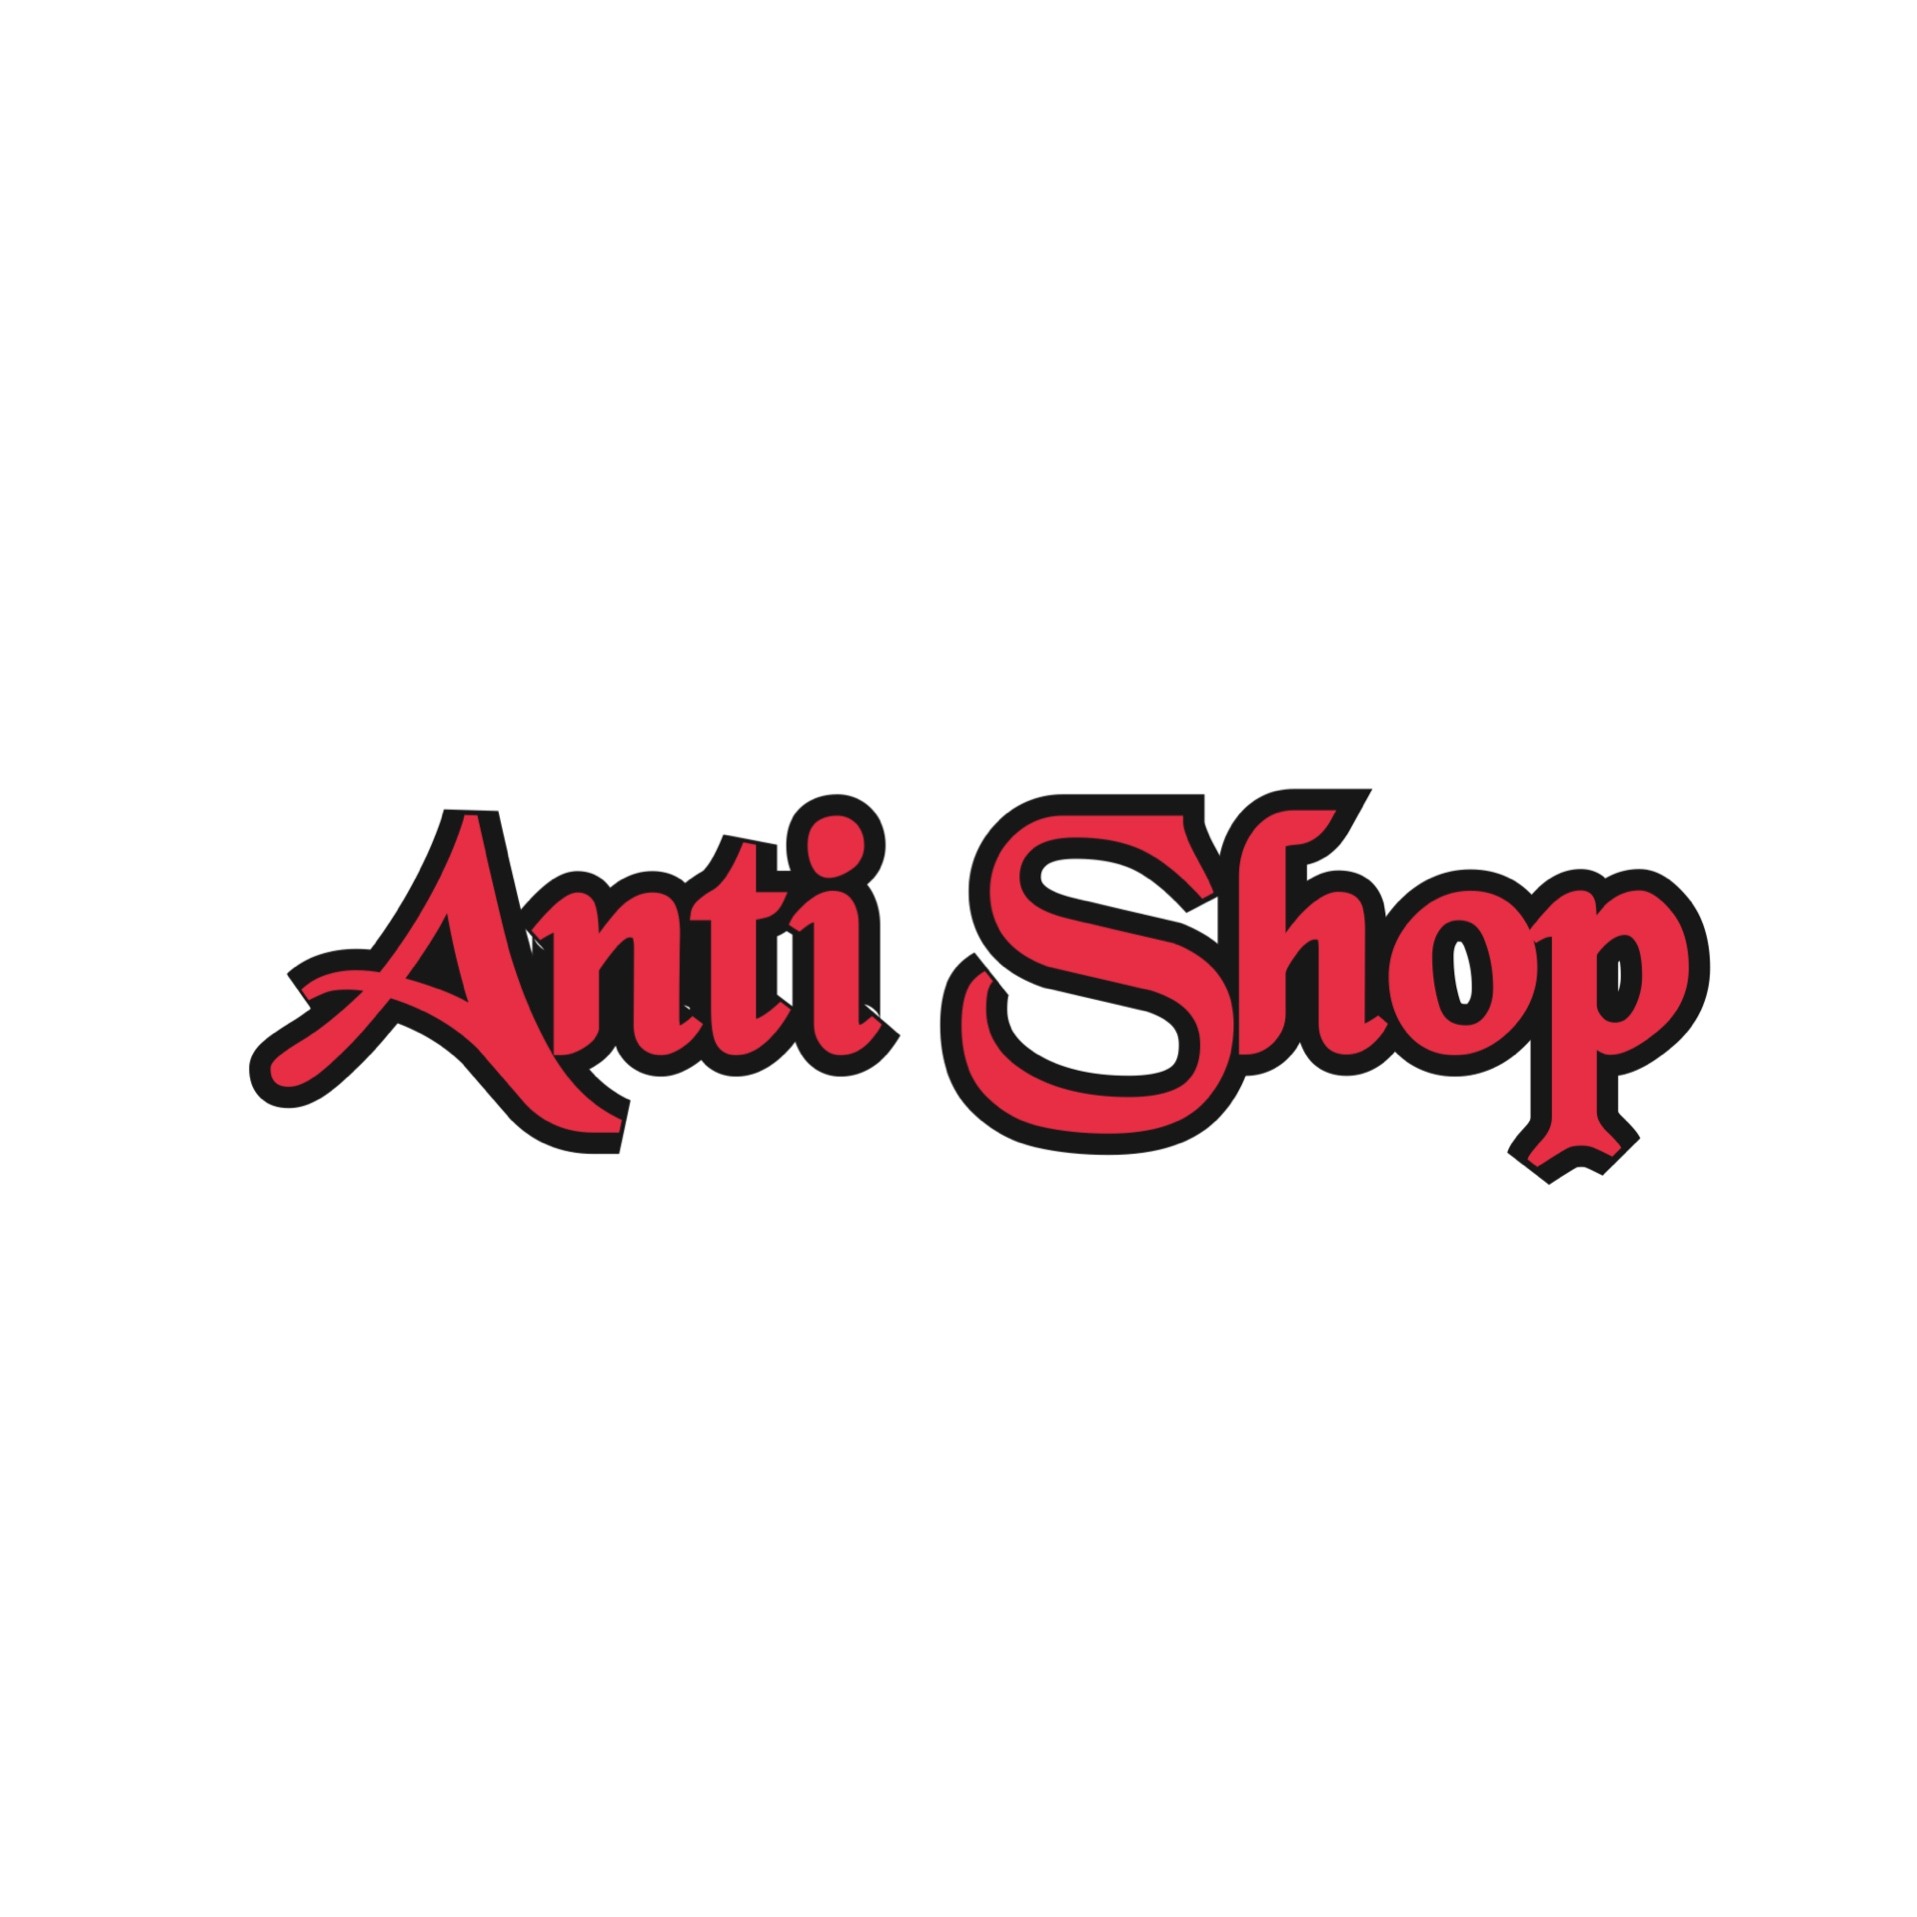 AntiShop